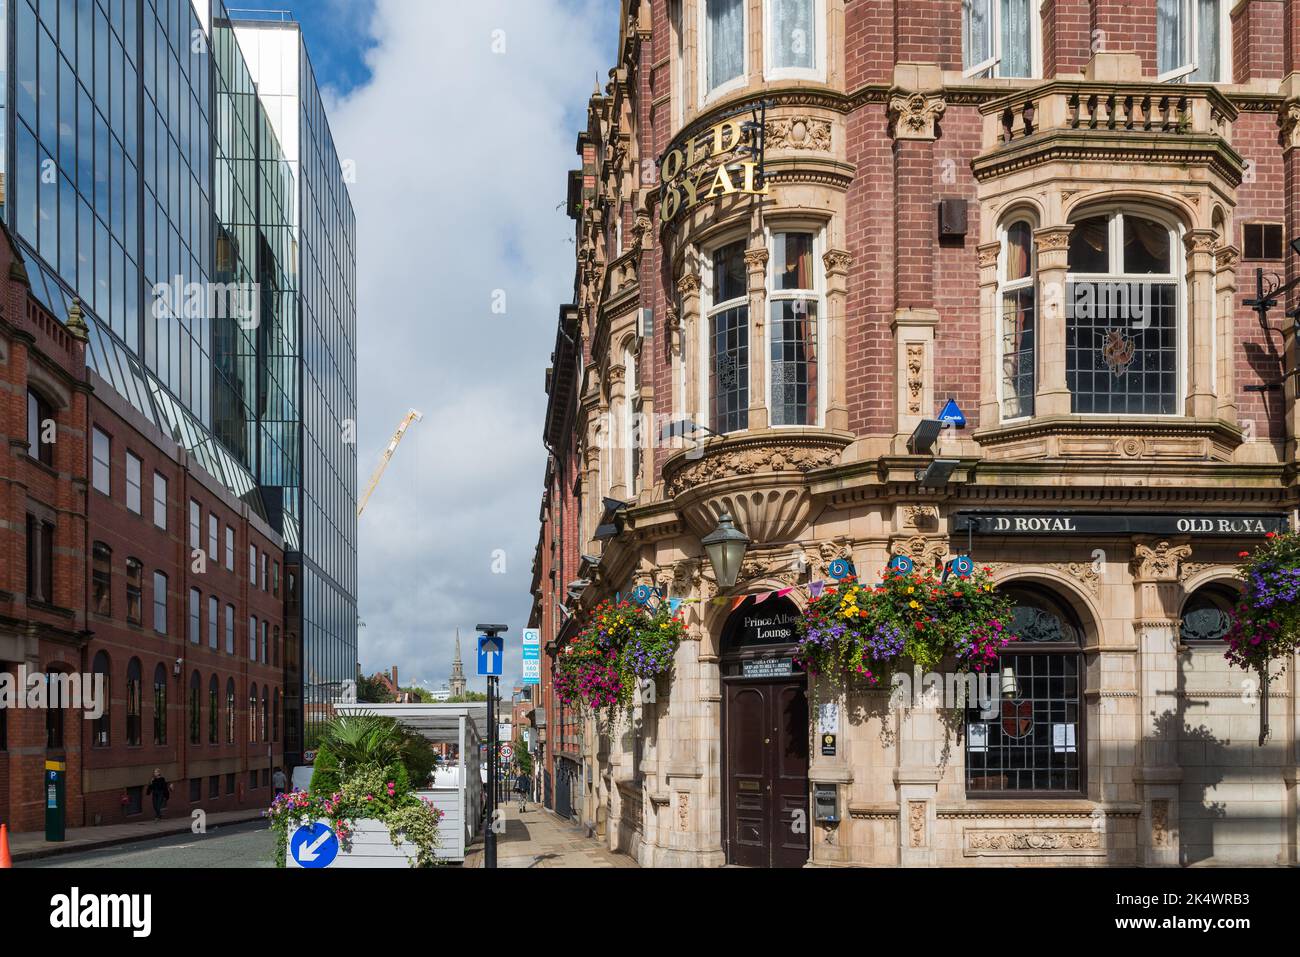 The Old Royal Pub in Church Street, Birmingham city centre, UK Stock Photo